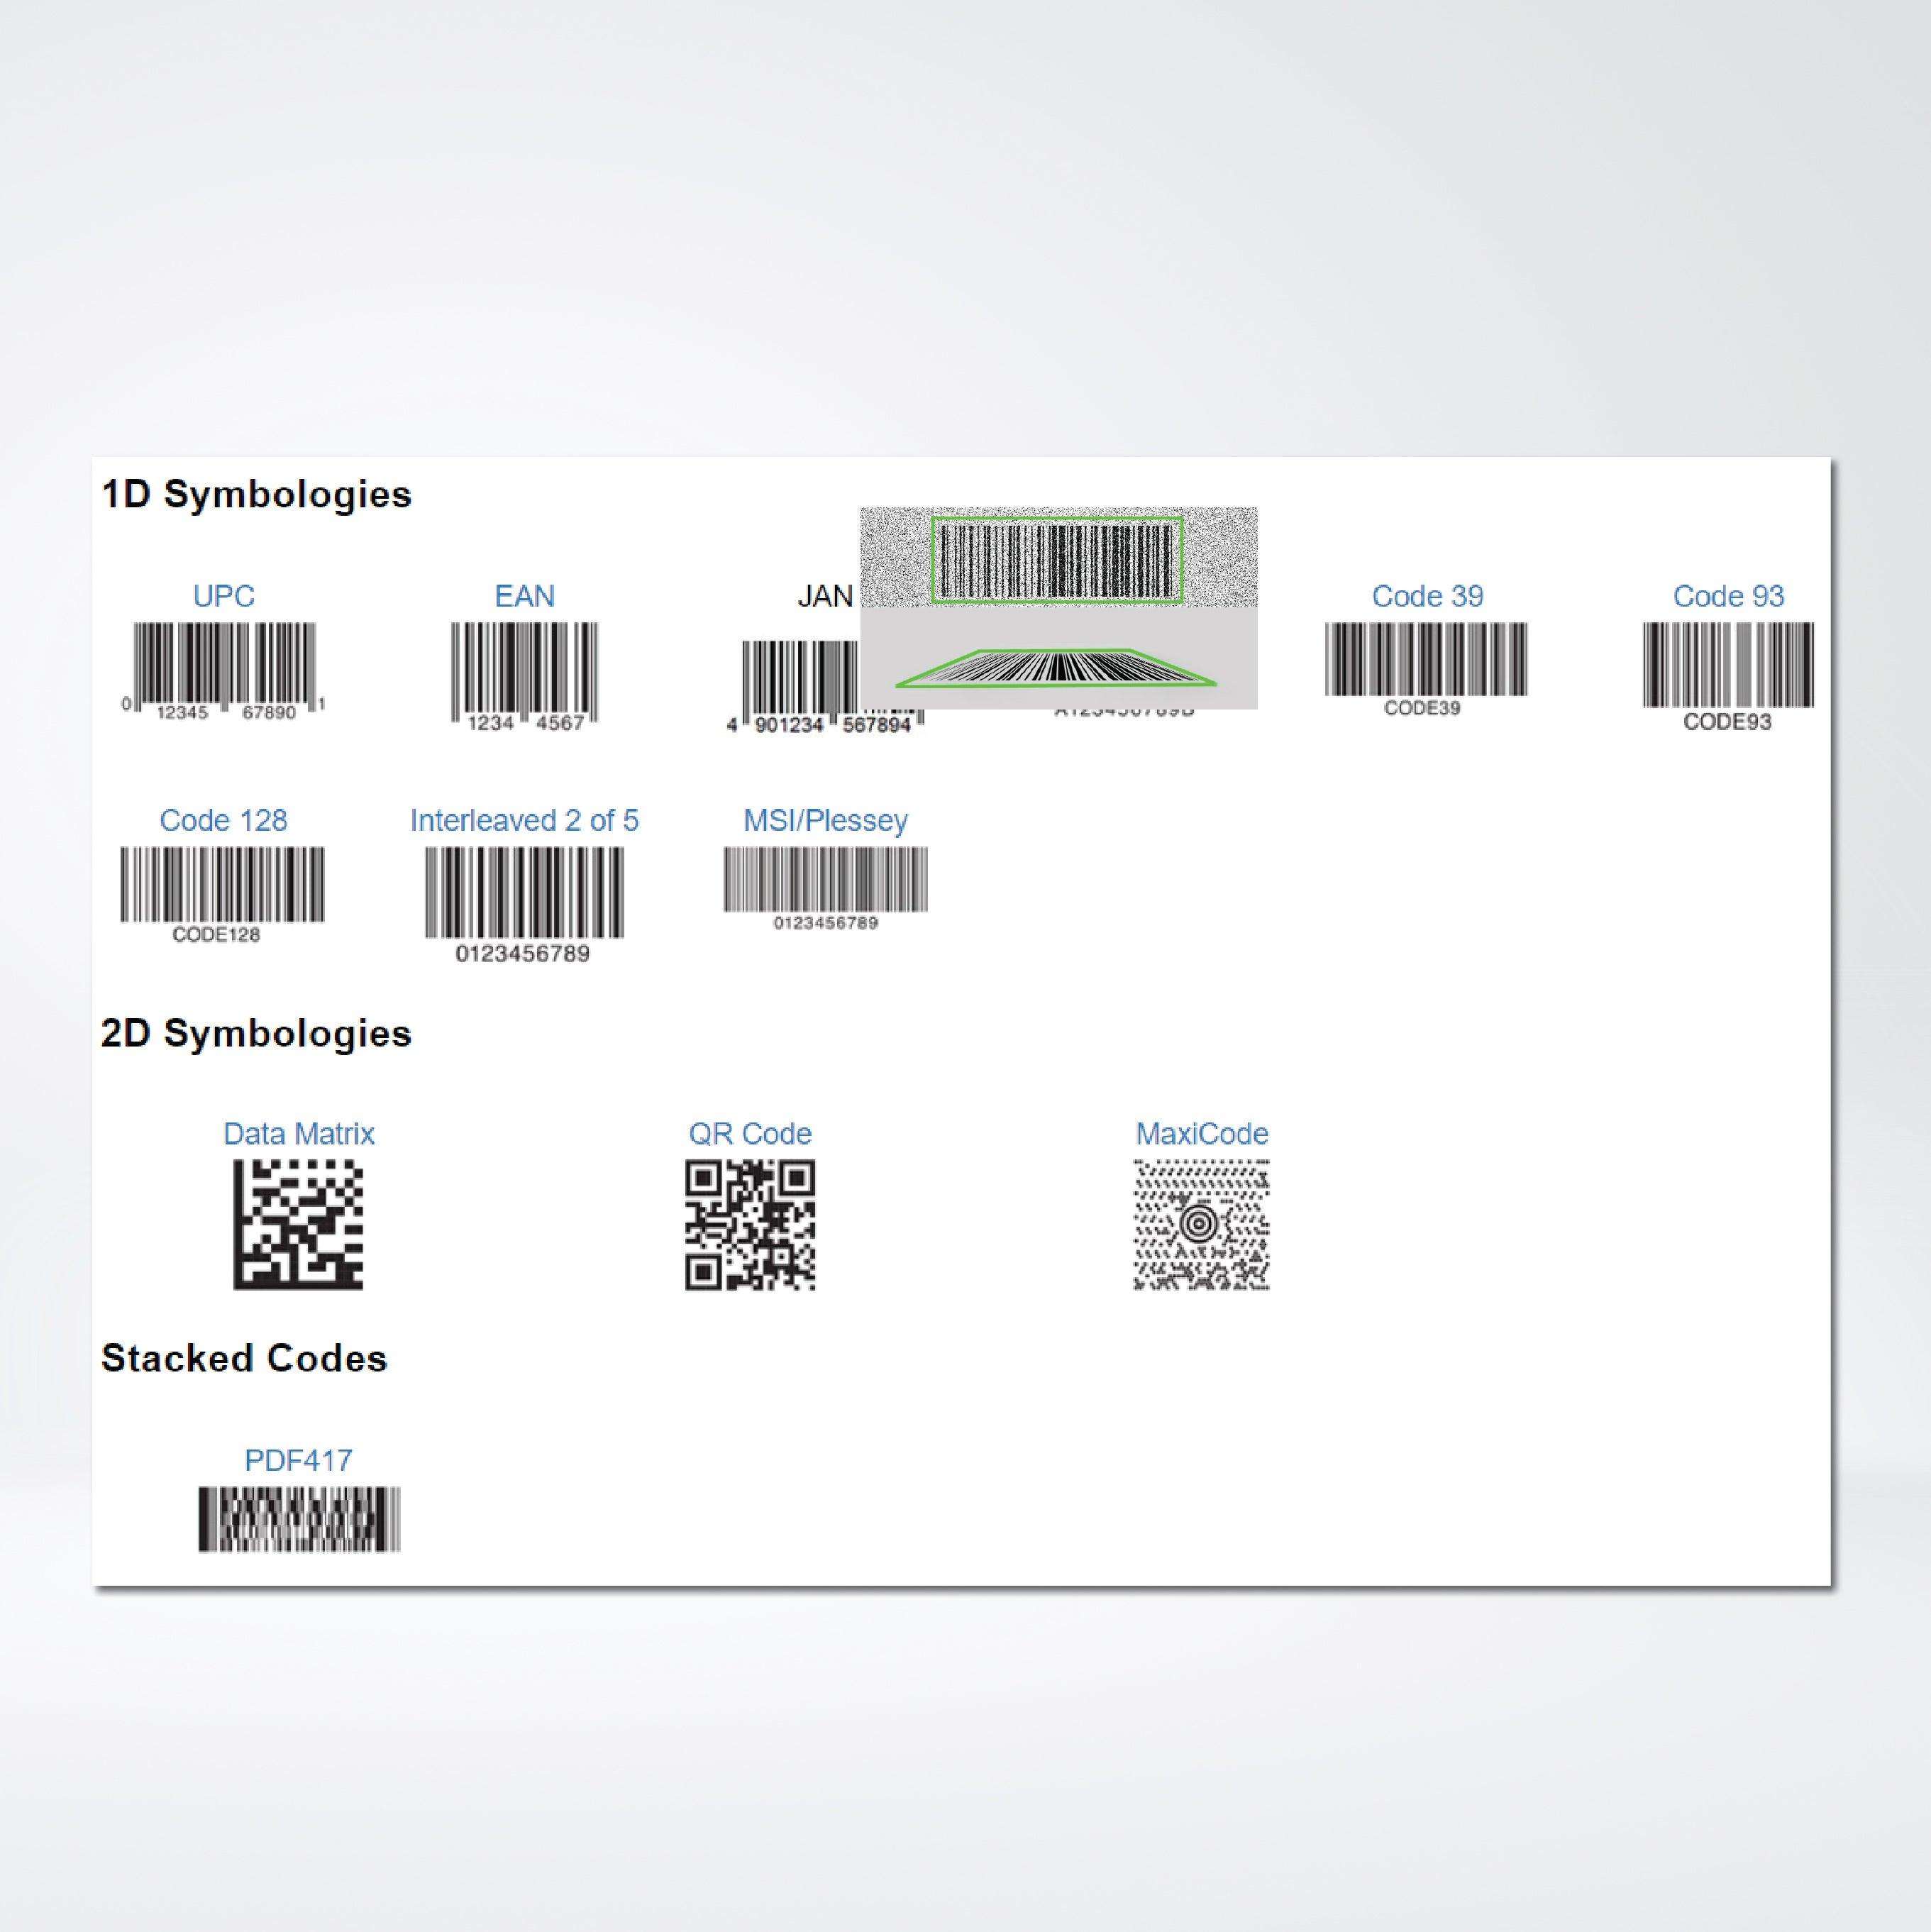 DataMan 470 series fixed-mount barcode readers - Riverplus